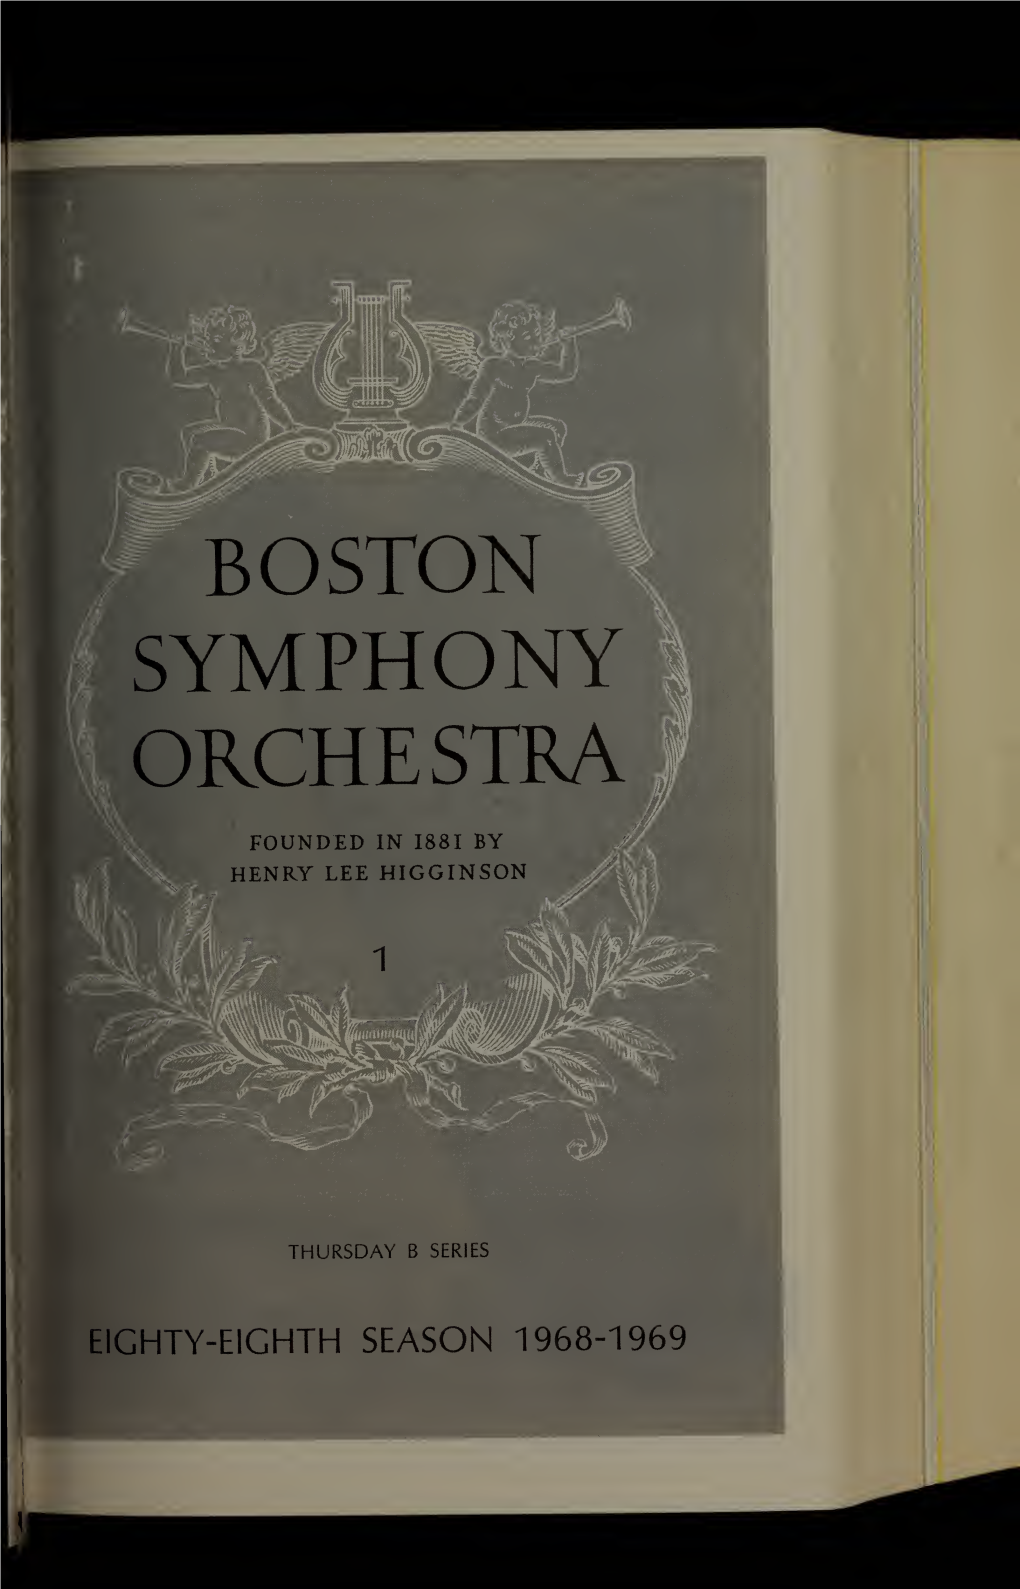 Boston Symphony Orchestra Concert Programs, Season 88, 1968-1969